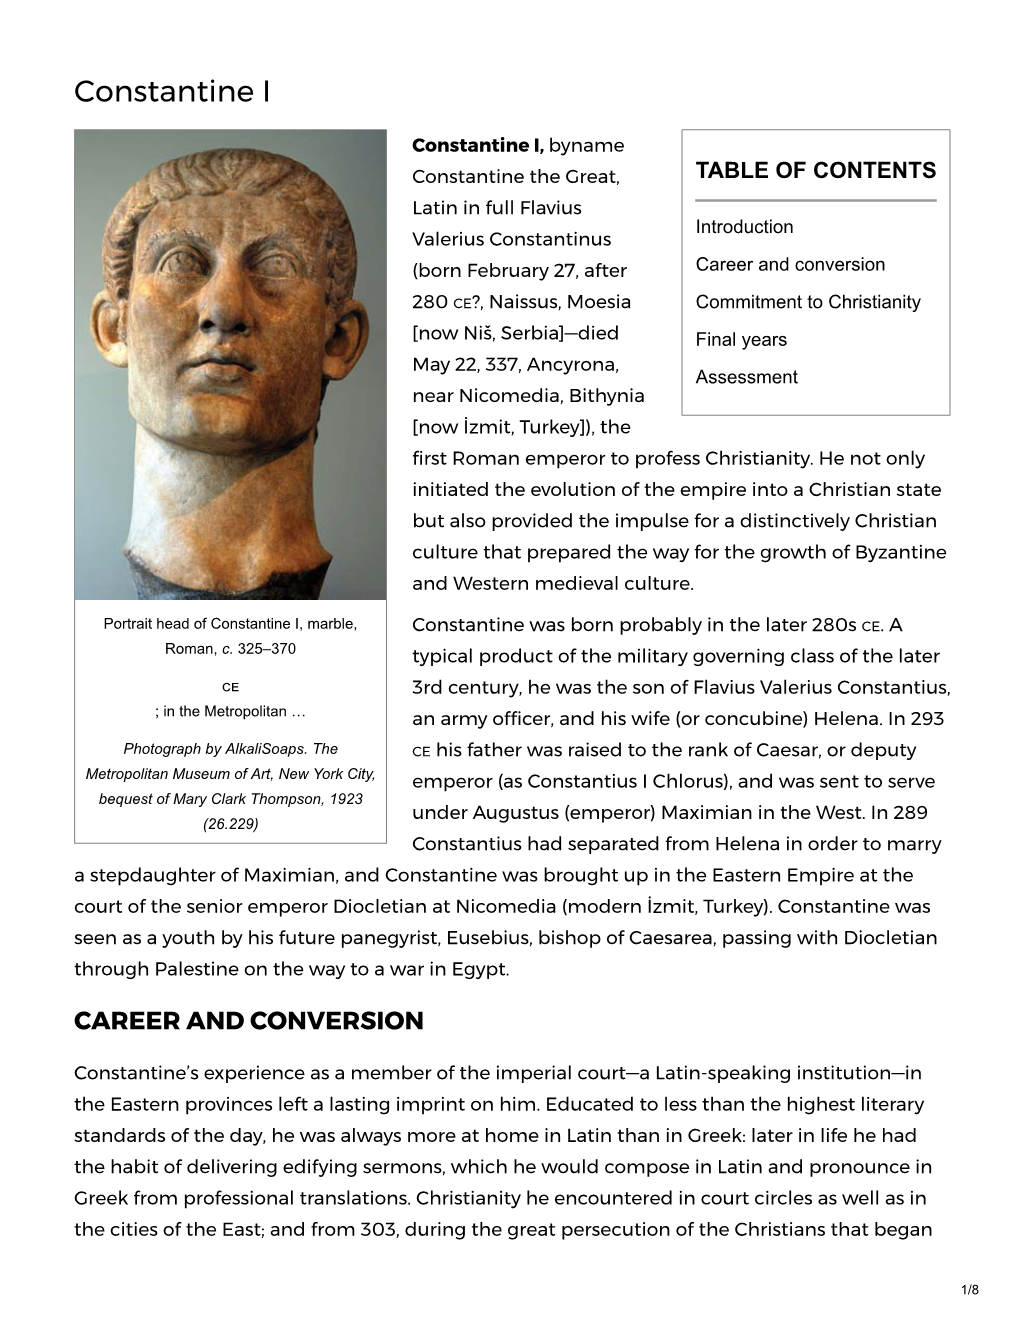 Constantine I -- Britannica Online Encyclopedia